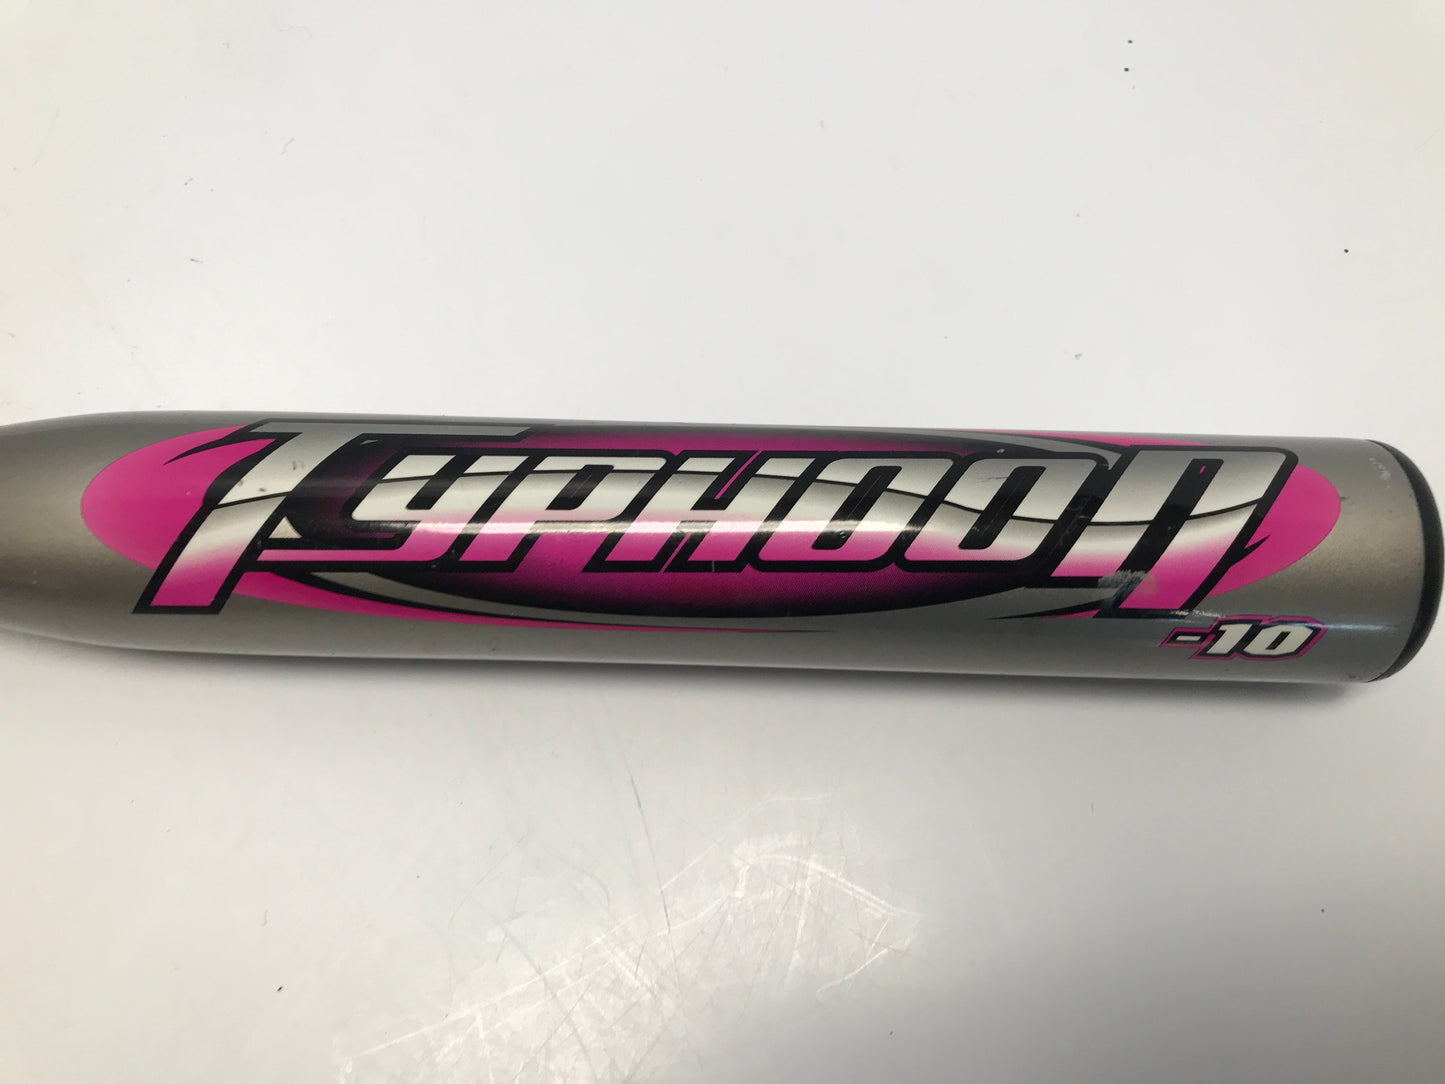 Baseball Bat 29 inch 19 oz Easton Typhoon Grey Pink Softball Excellent